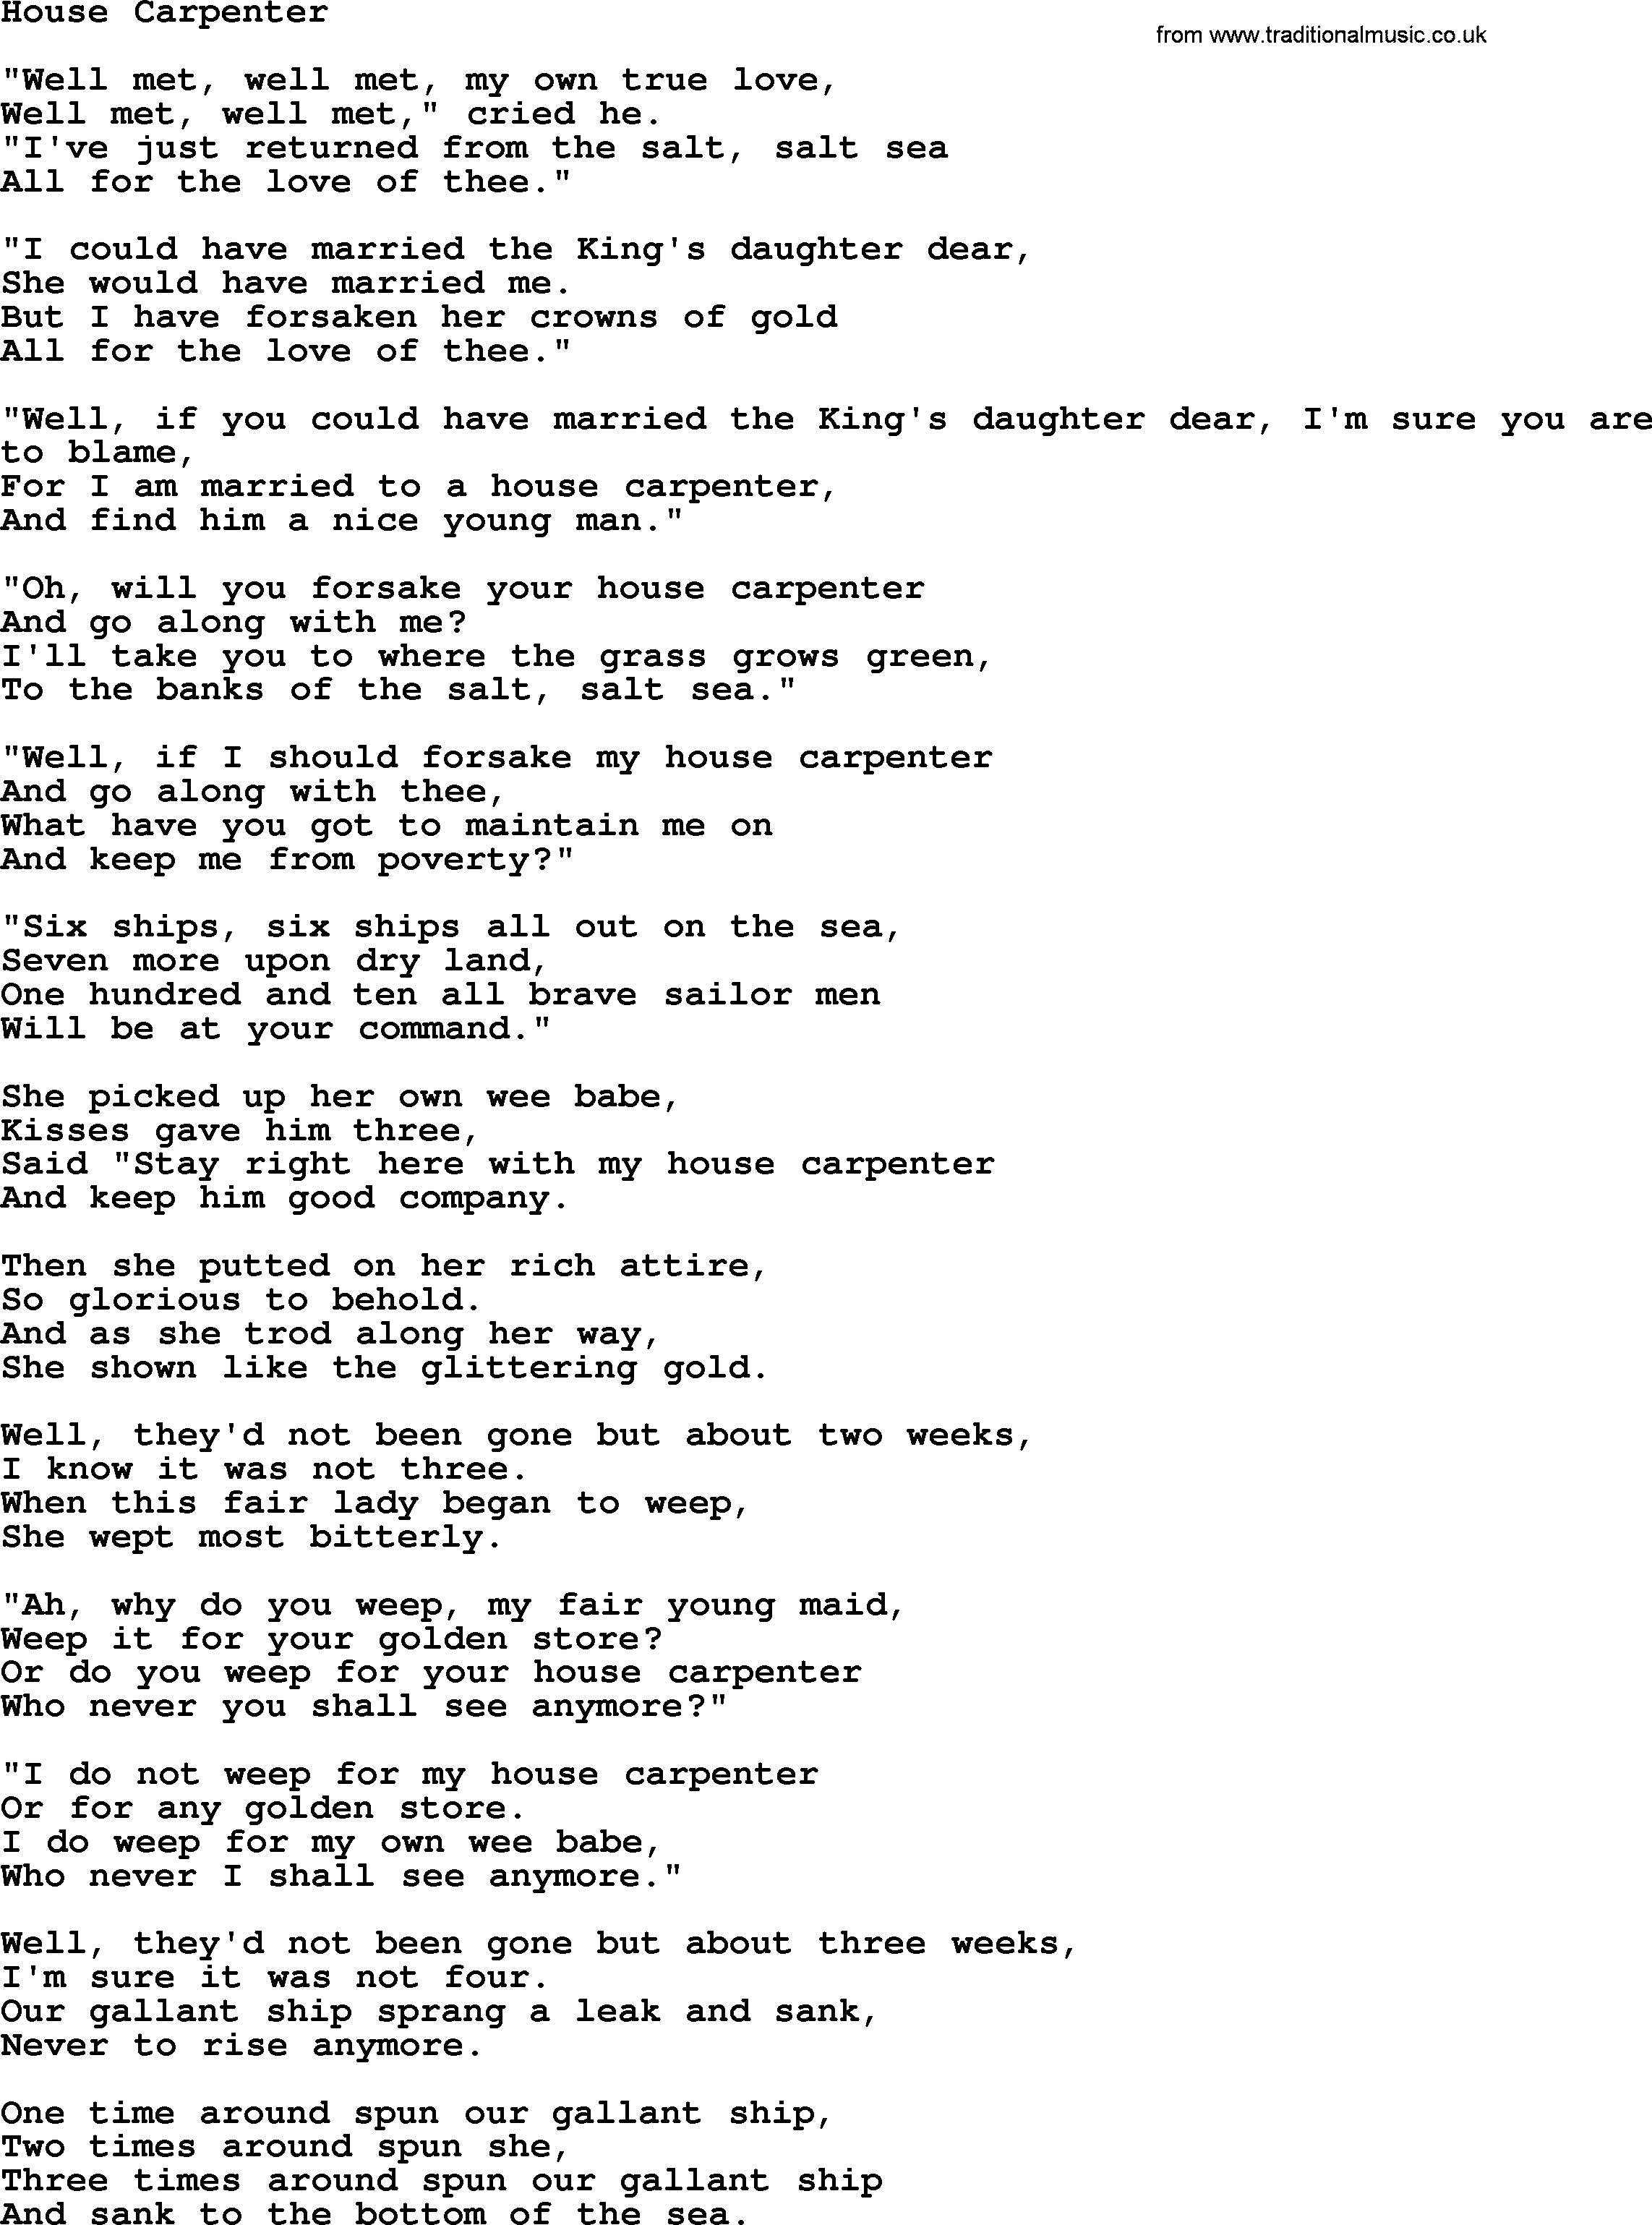 Joan Baez song House Carpenter, lyrics